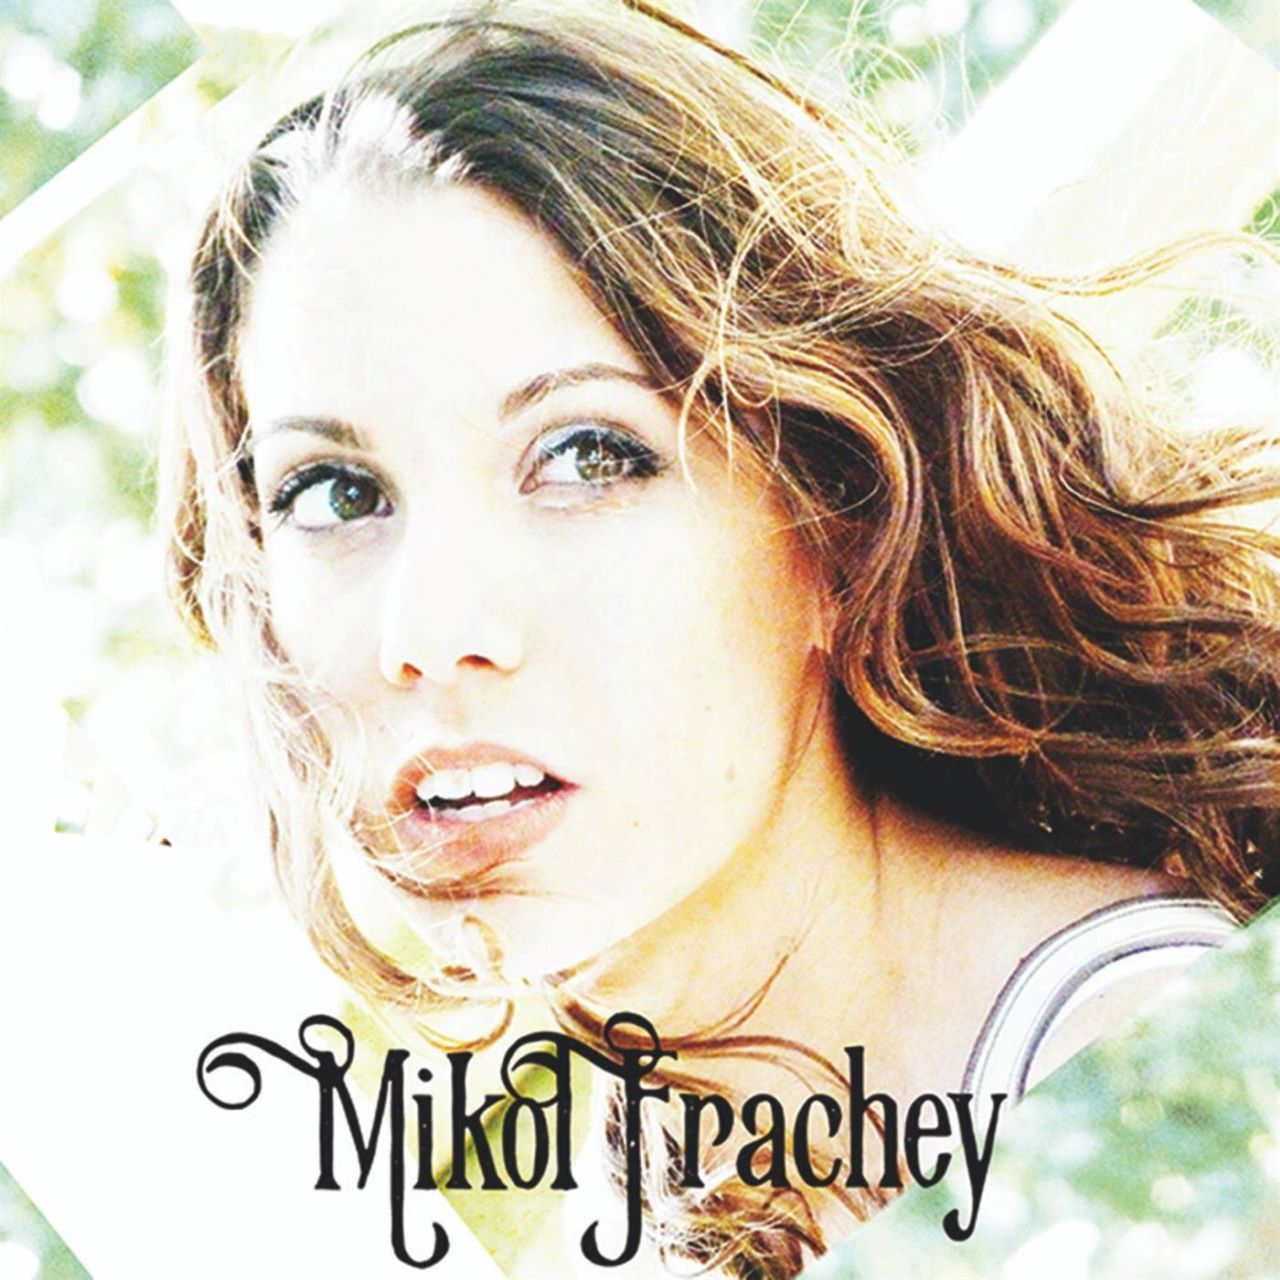 Mikol Frachey